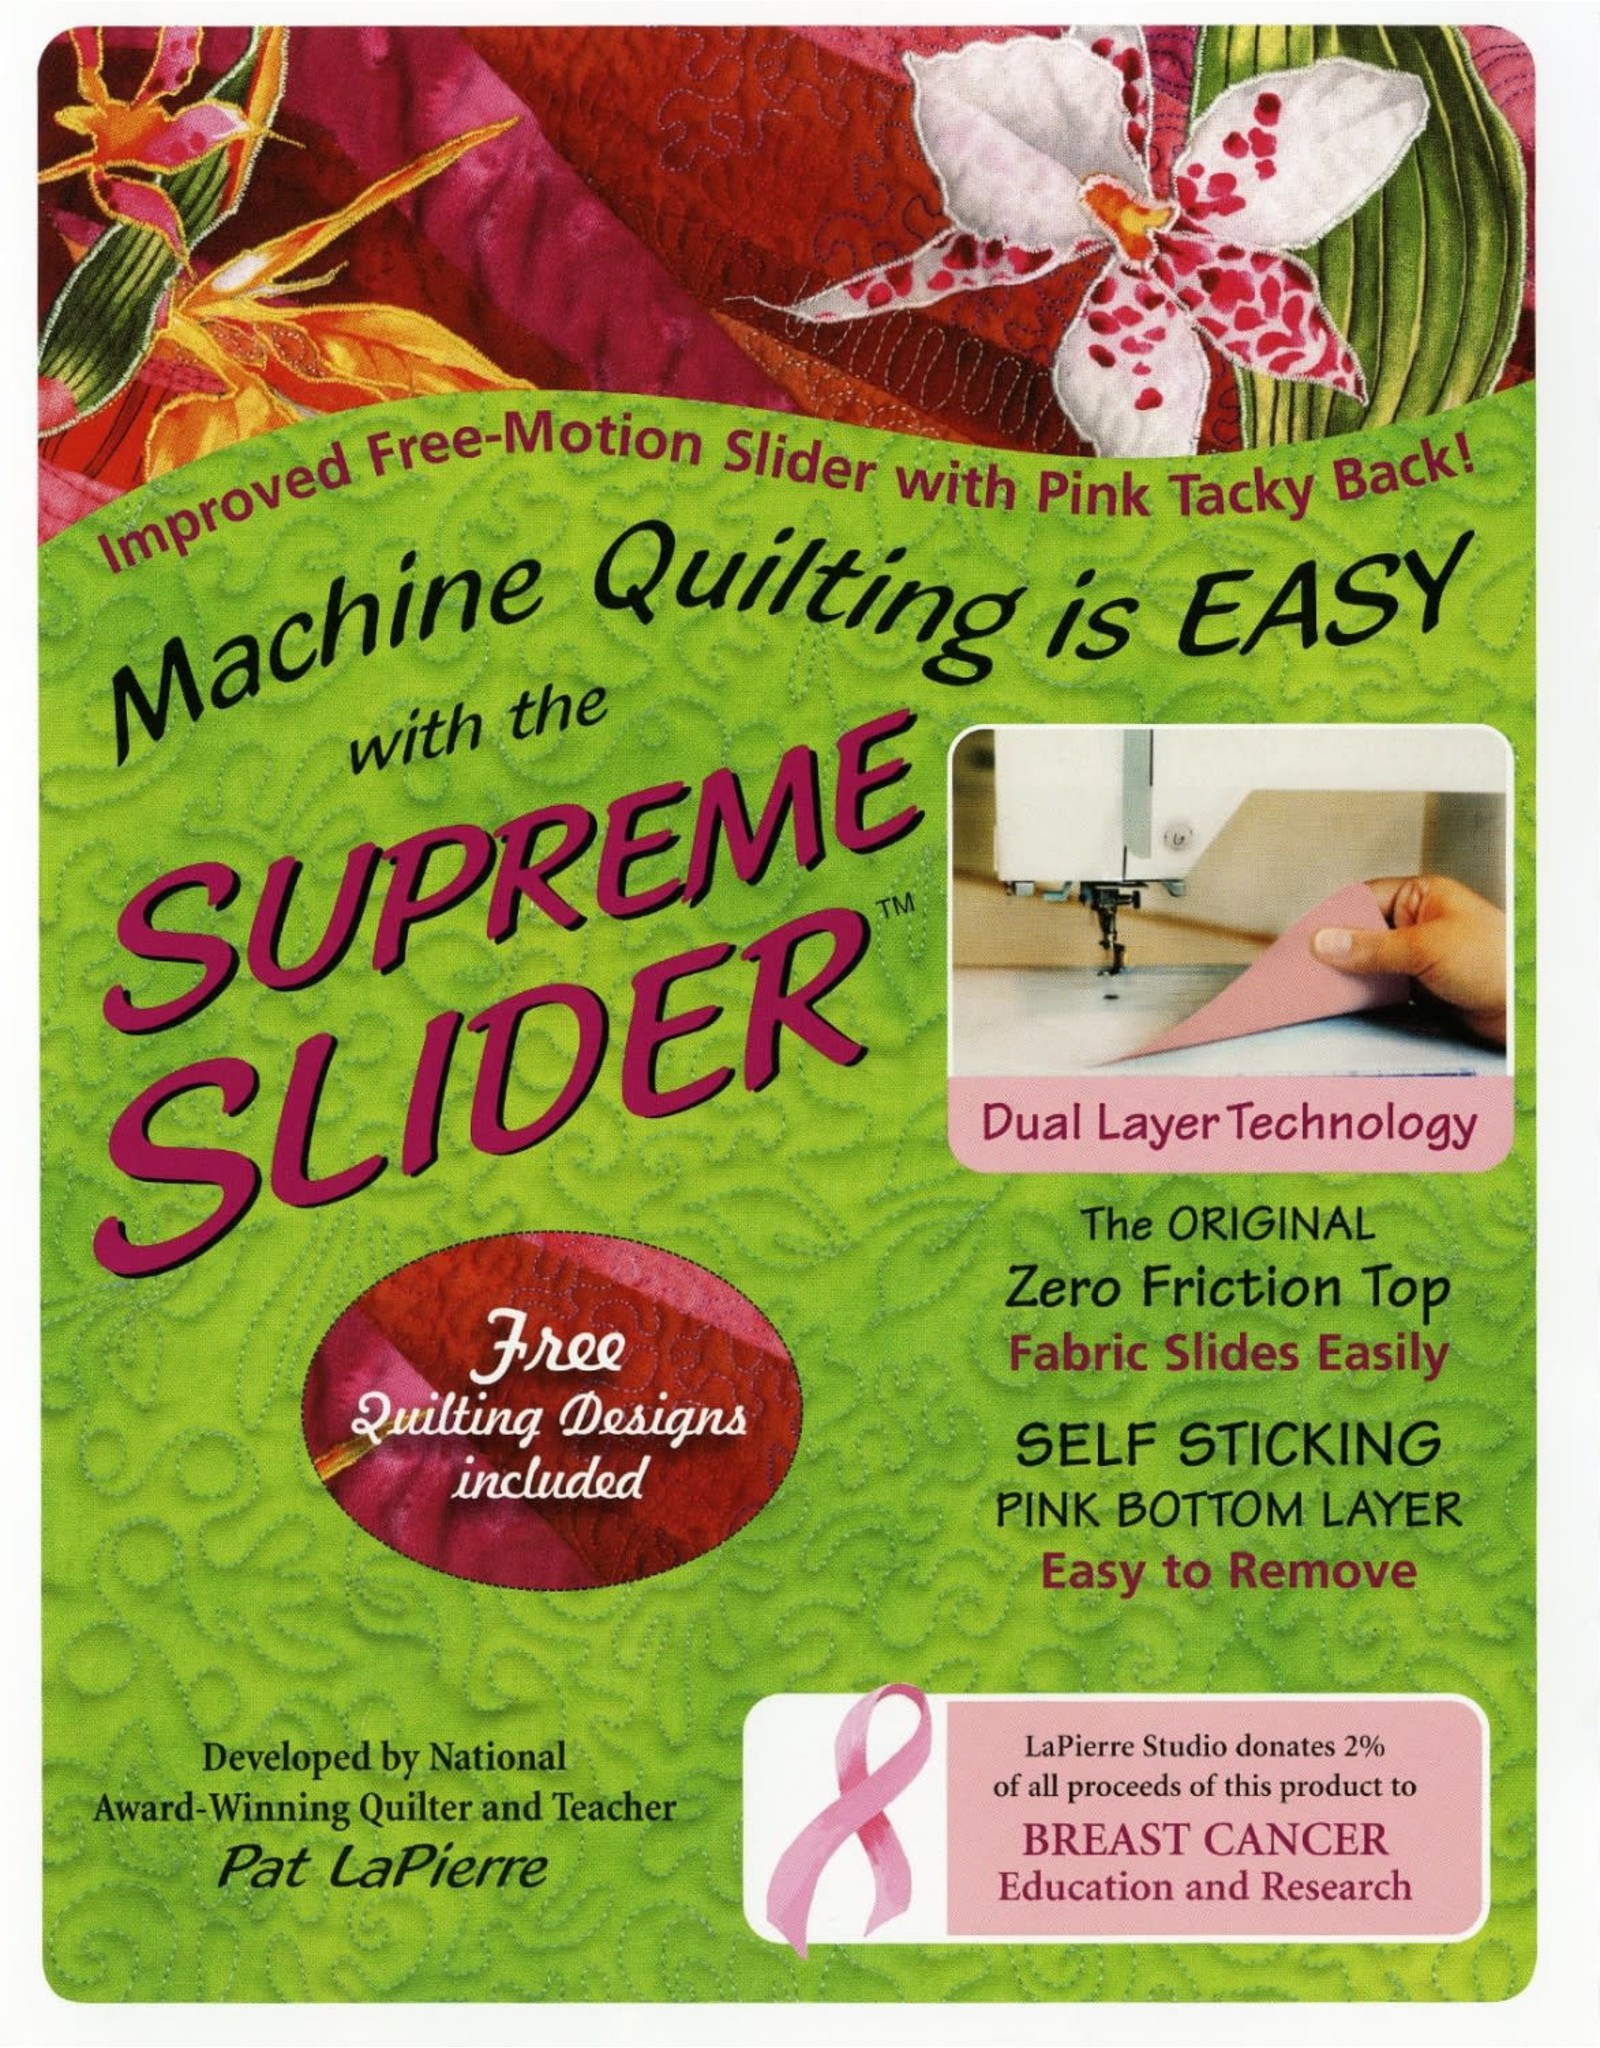 Supreme Slider - standard - 20 x 29 cm